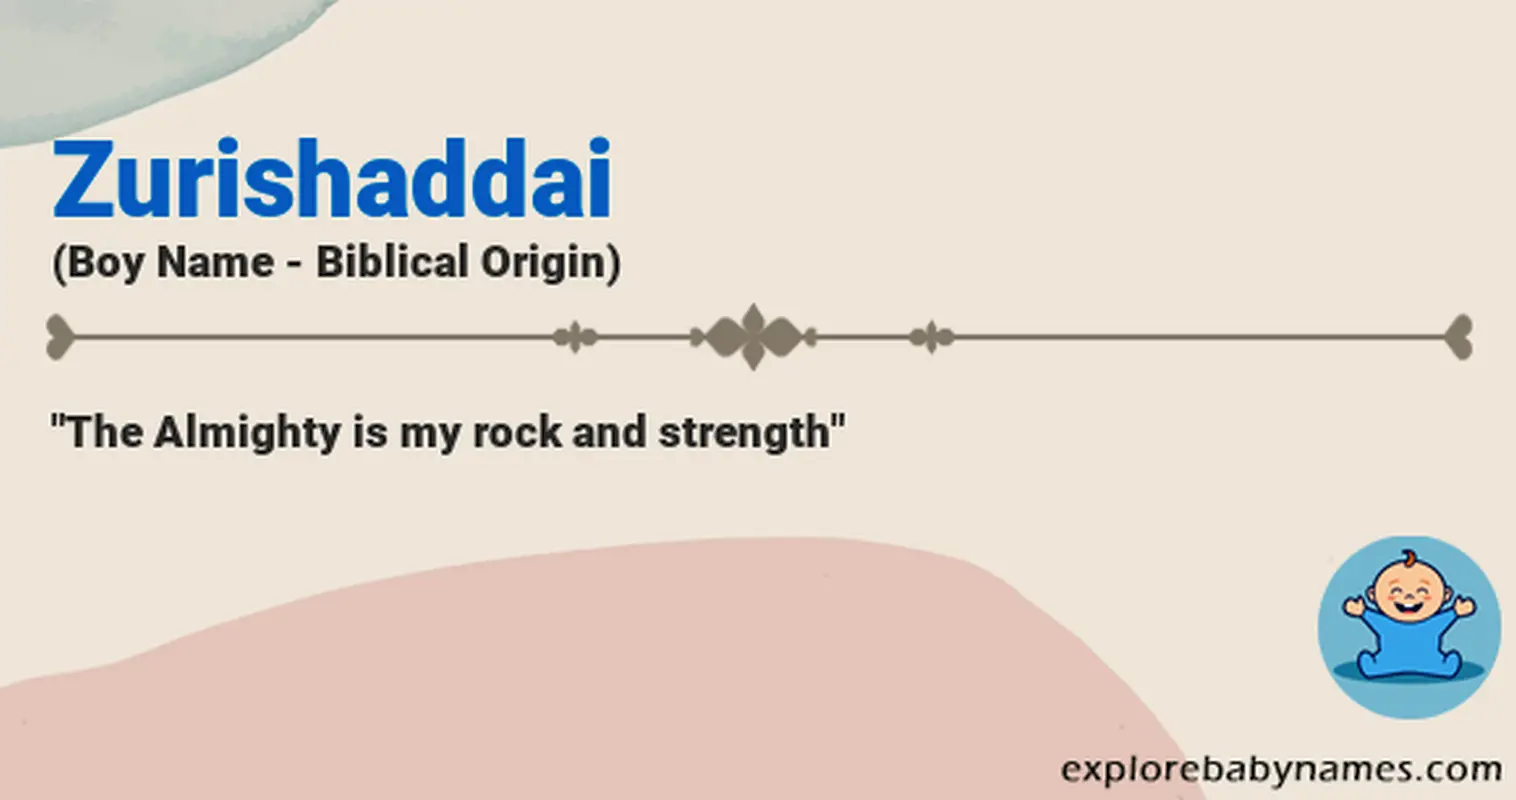 Meaning of Zurishaddai